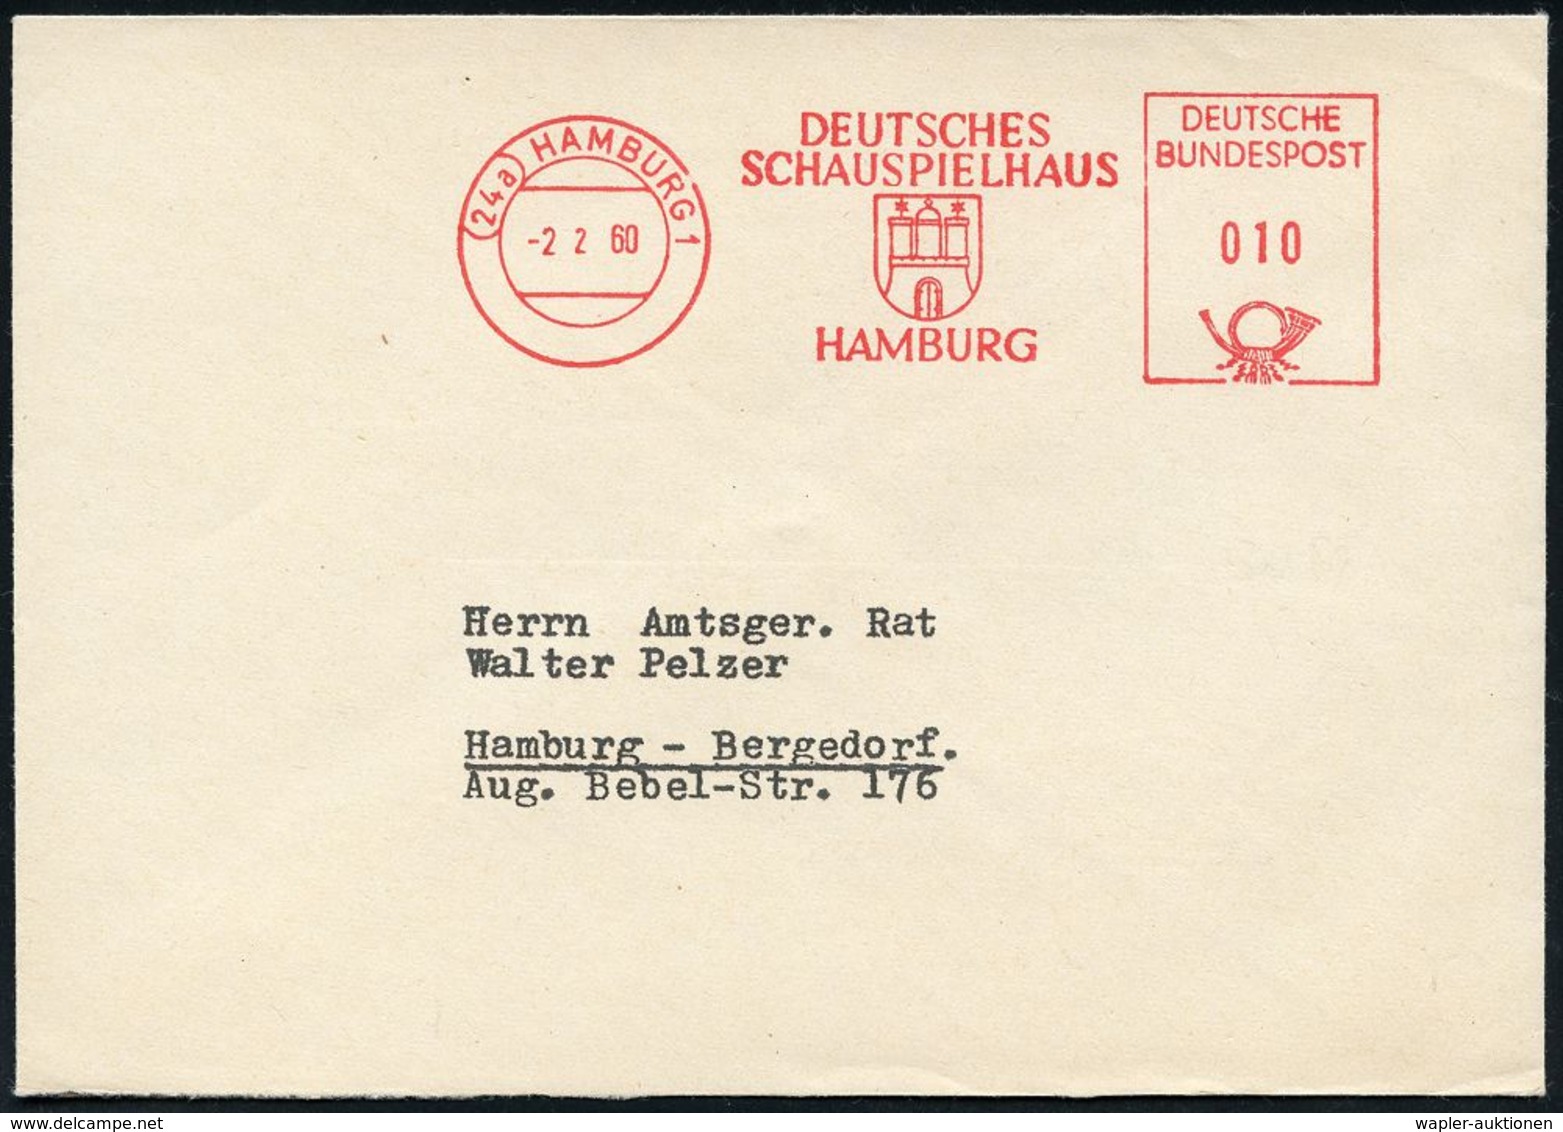 BÜHNE / THEATER / THEATER-FESTIVALS : (22a) HAMBURG 1/ DEUTSCHES/ SCHAUSPIELHAUS 1960 (2.2.) AFS (Stadtwappen) Rs. Abs.- - Theater